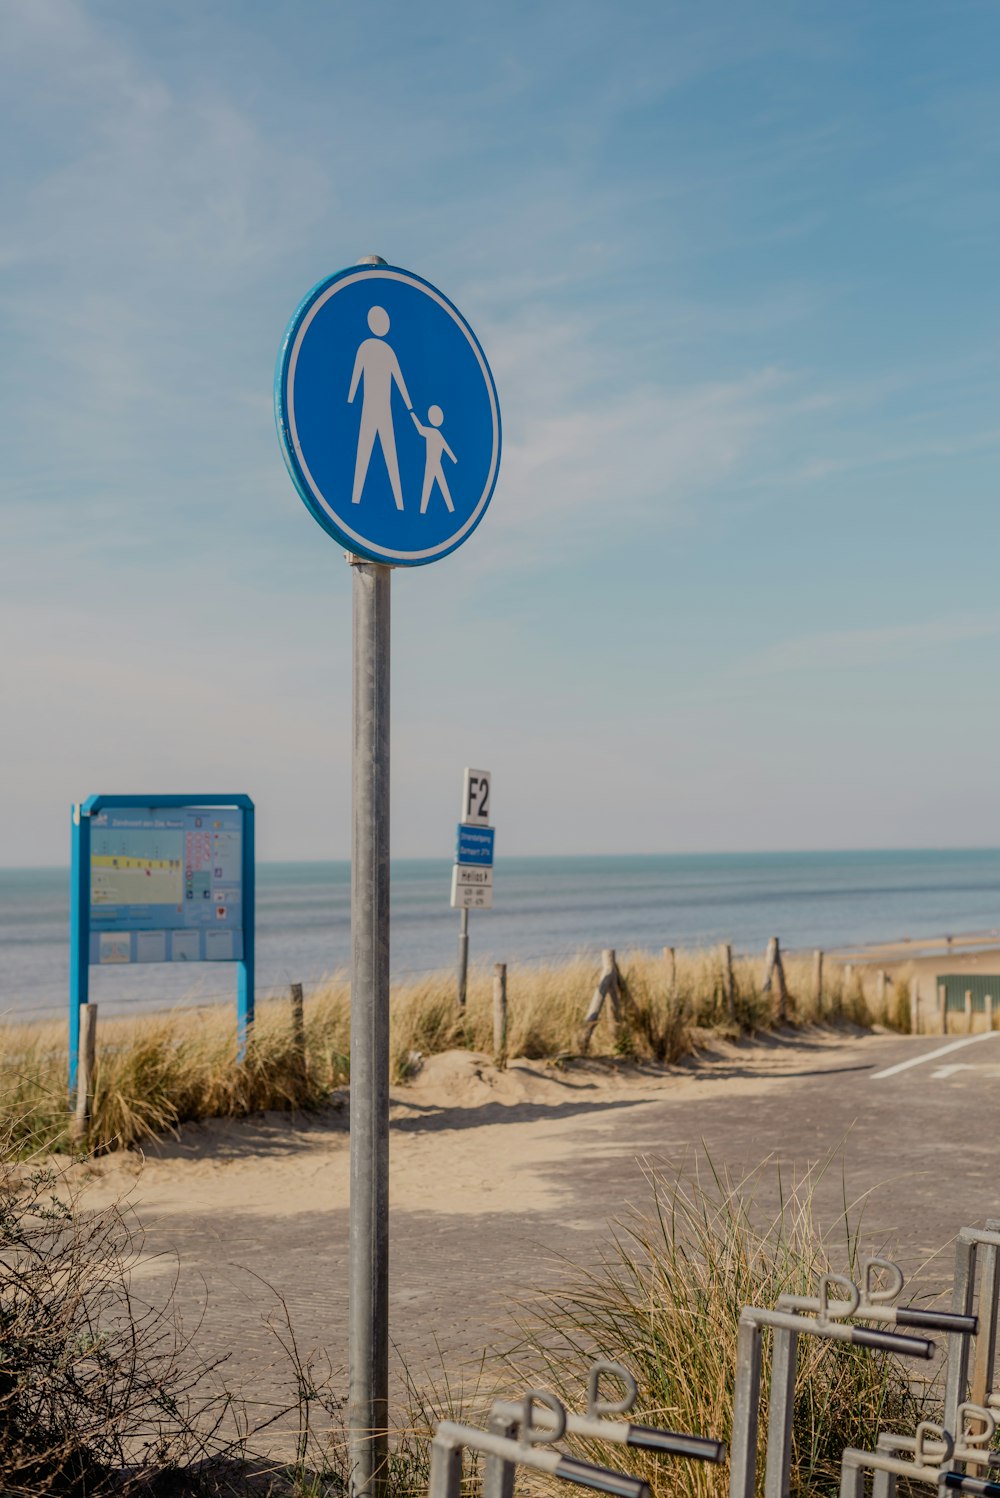 a blue sign on a metal pole next to a beach